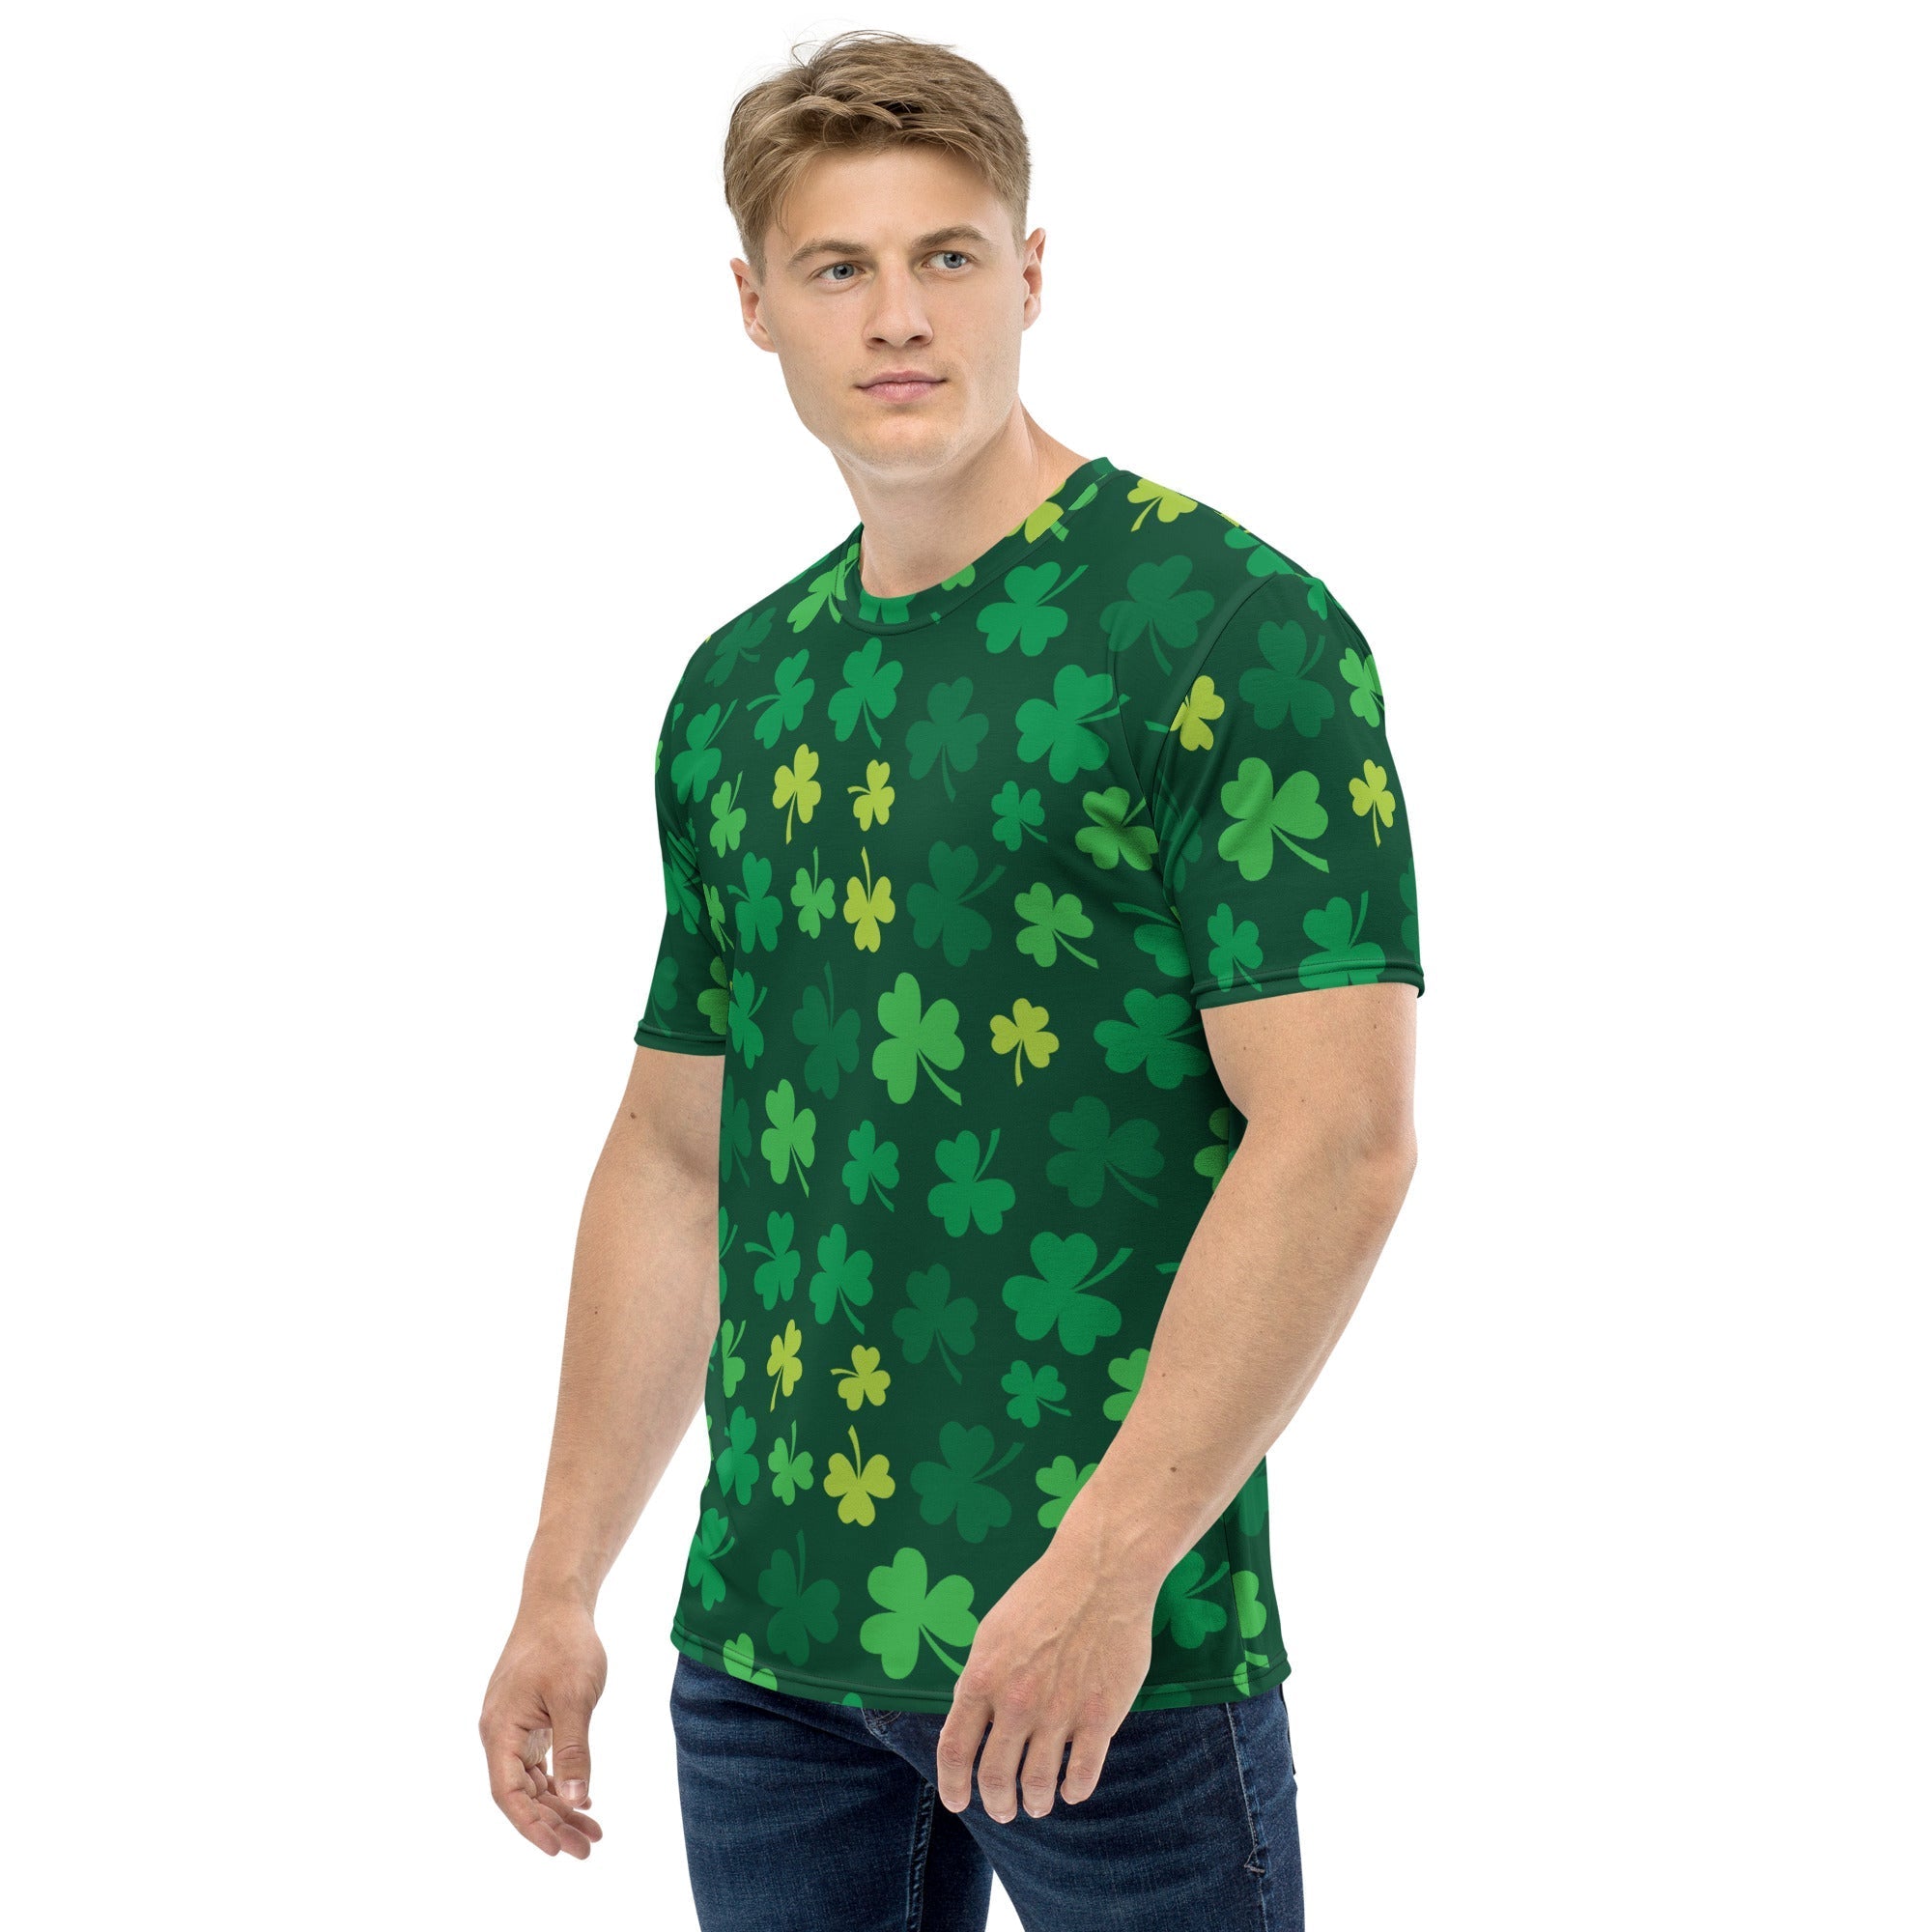 Shamrock Pattern Men's T-shirt